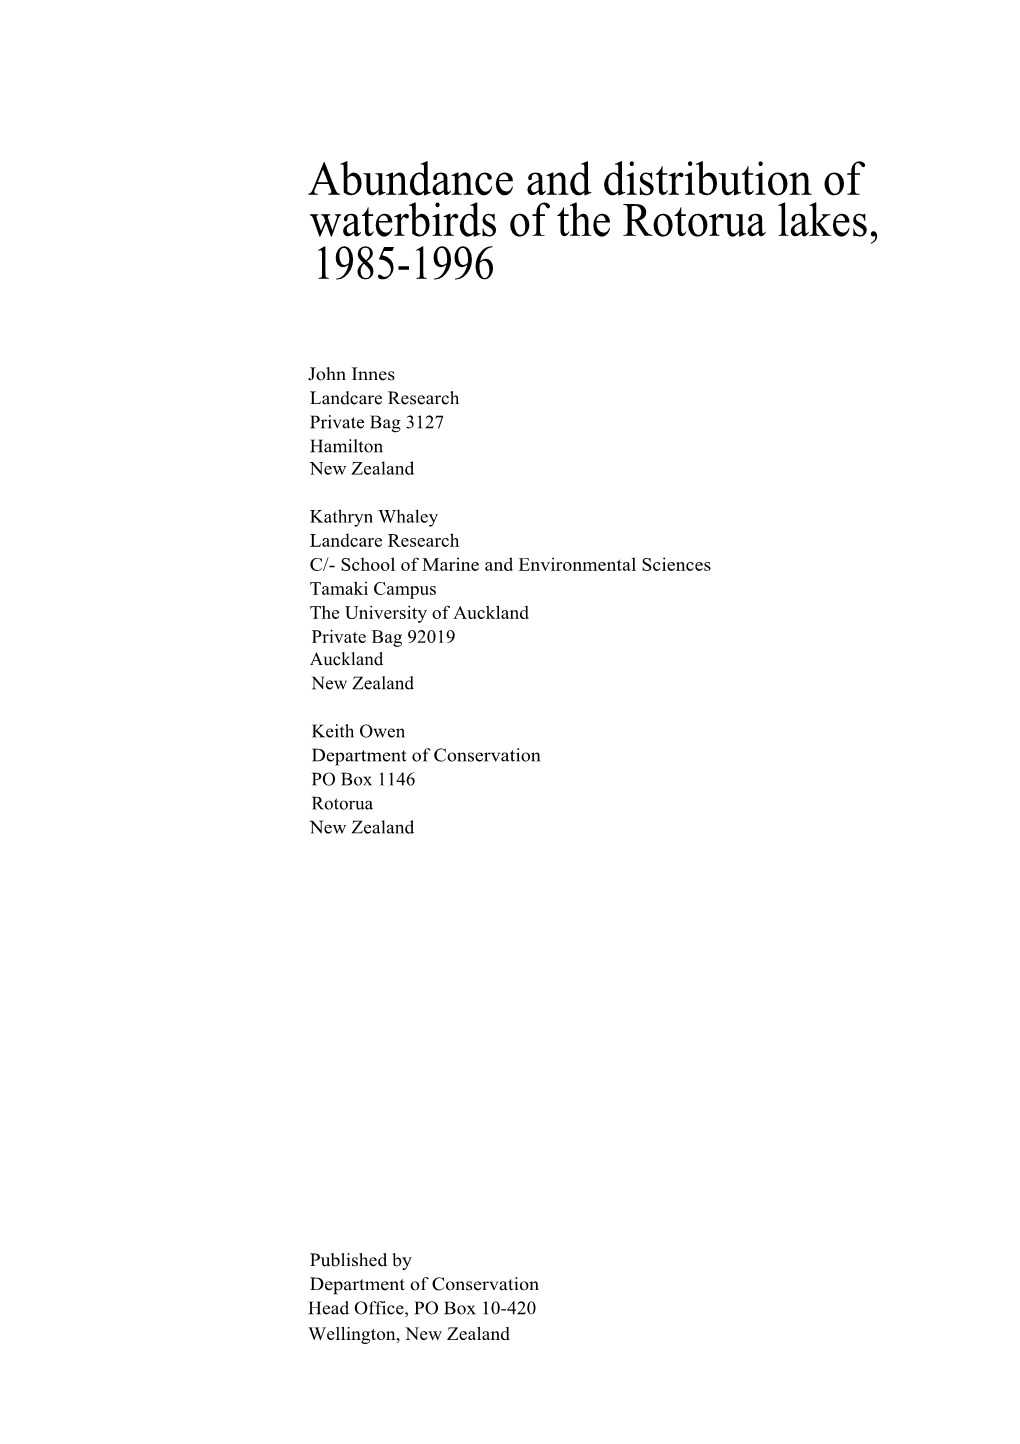 Abundance and Distribution of Waterbirds of the Rotorua Lakes, 1985-1996